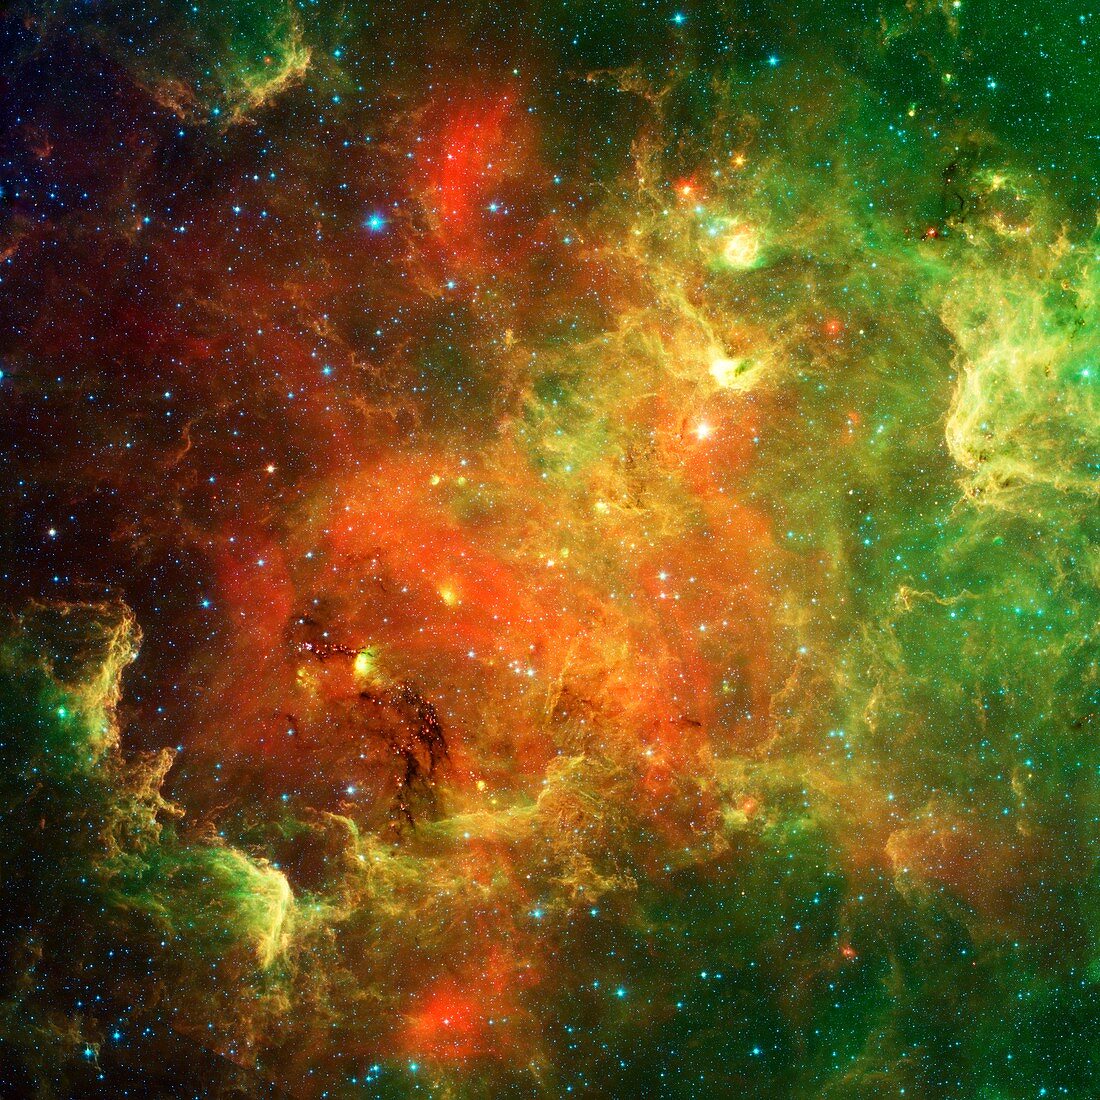 North America Nebula,infrared image